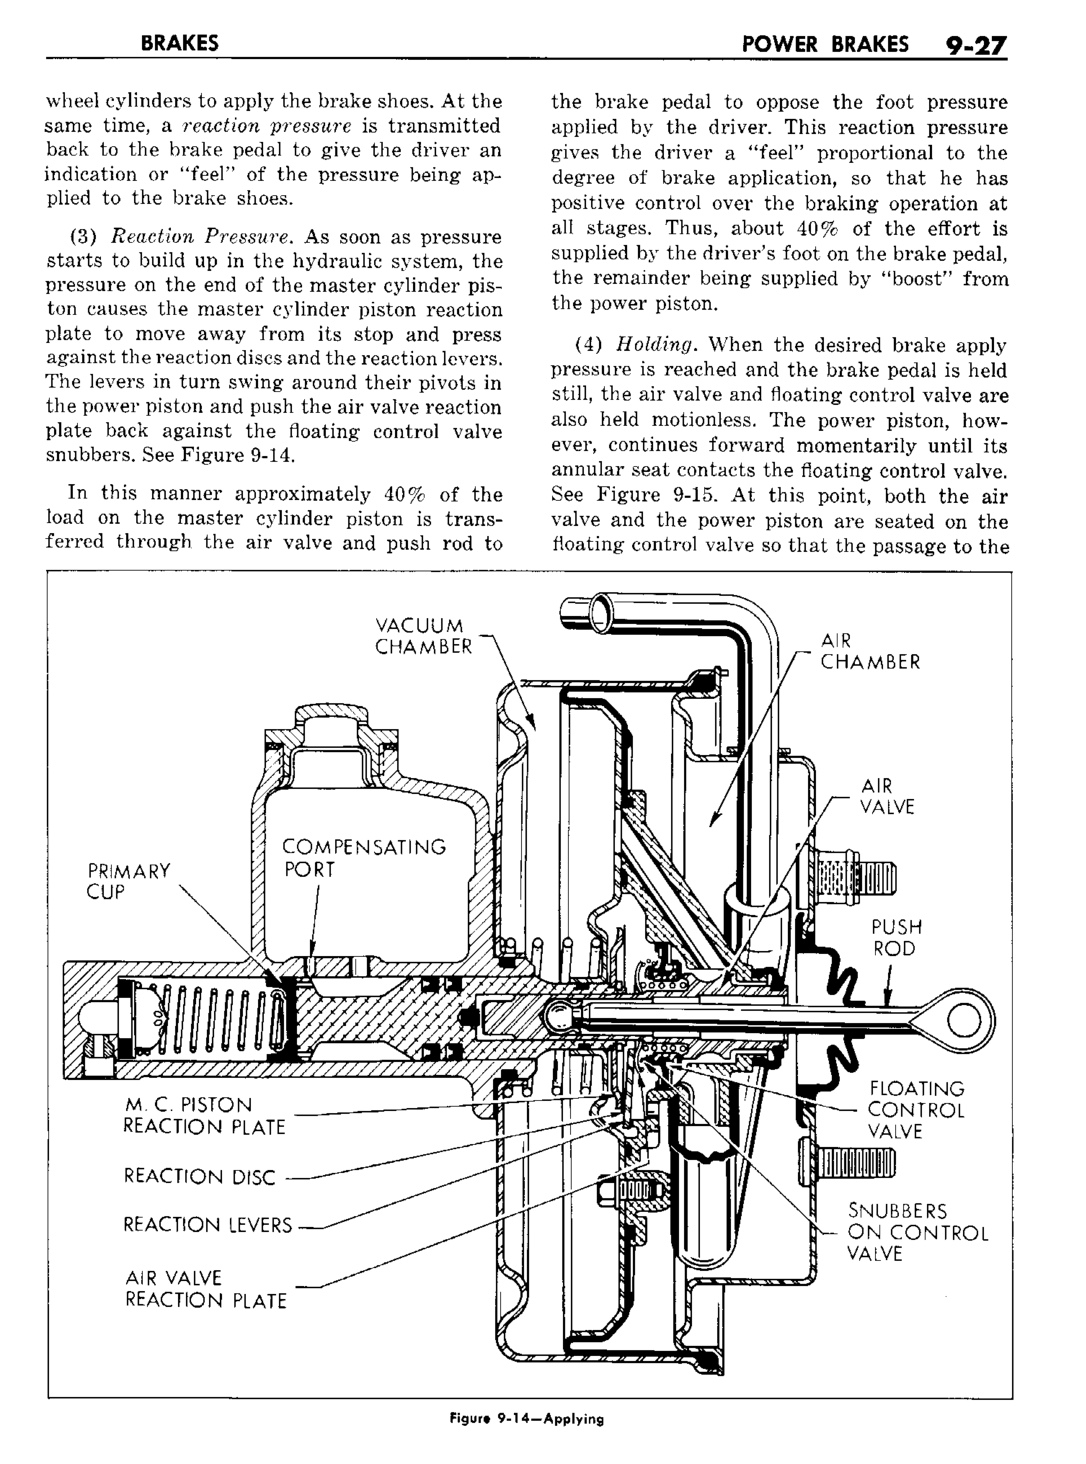 n_10 1960 Buick Shop Manual - Brakes-027-027.jpg